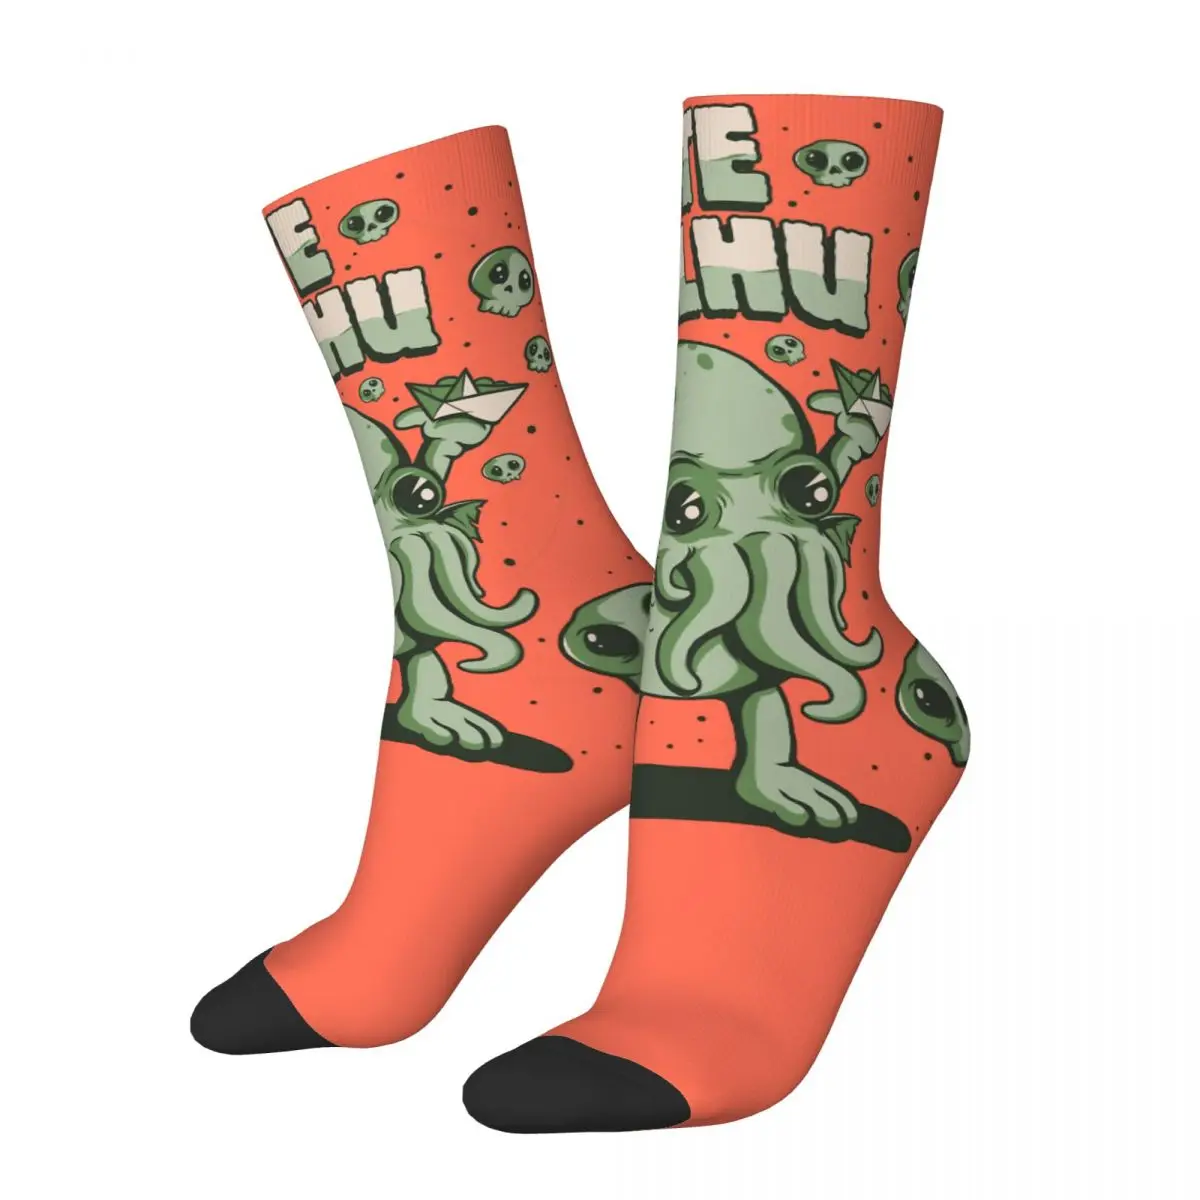 Hip Hop Retro Cute Crazy Men's Compression Socks Unisex Cthulhu Mythos Street Style Pattern Printed Funny Happy Crew Sock